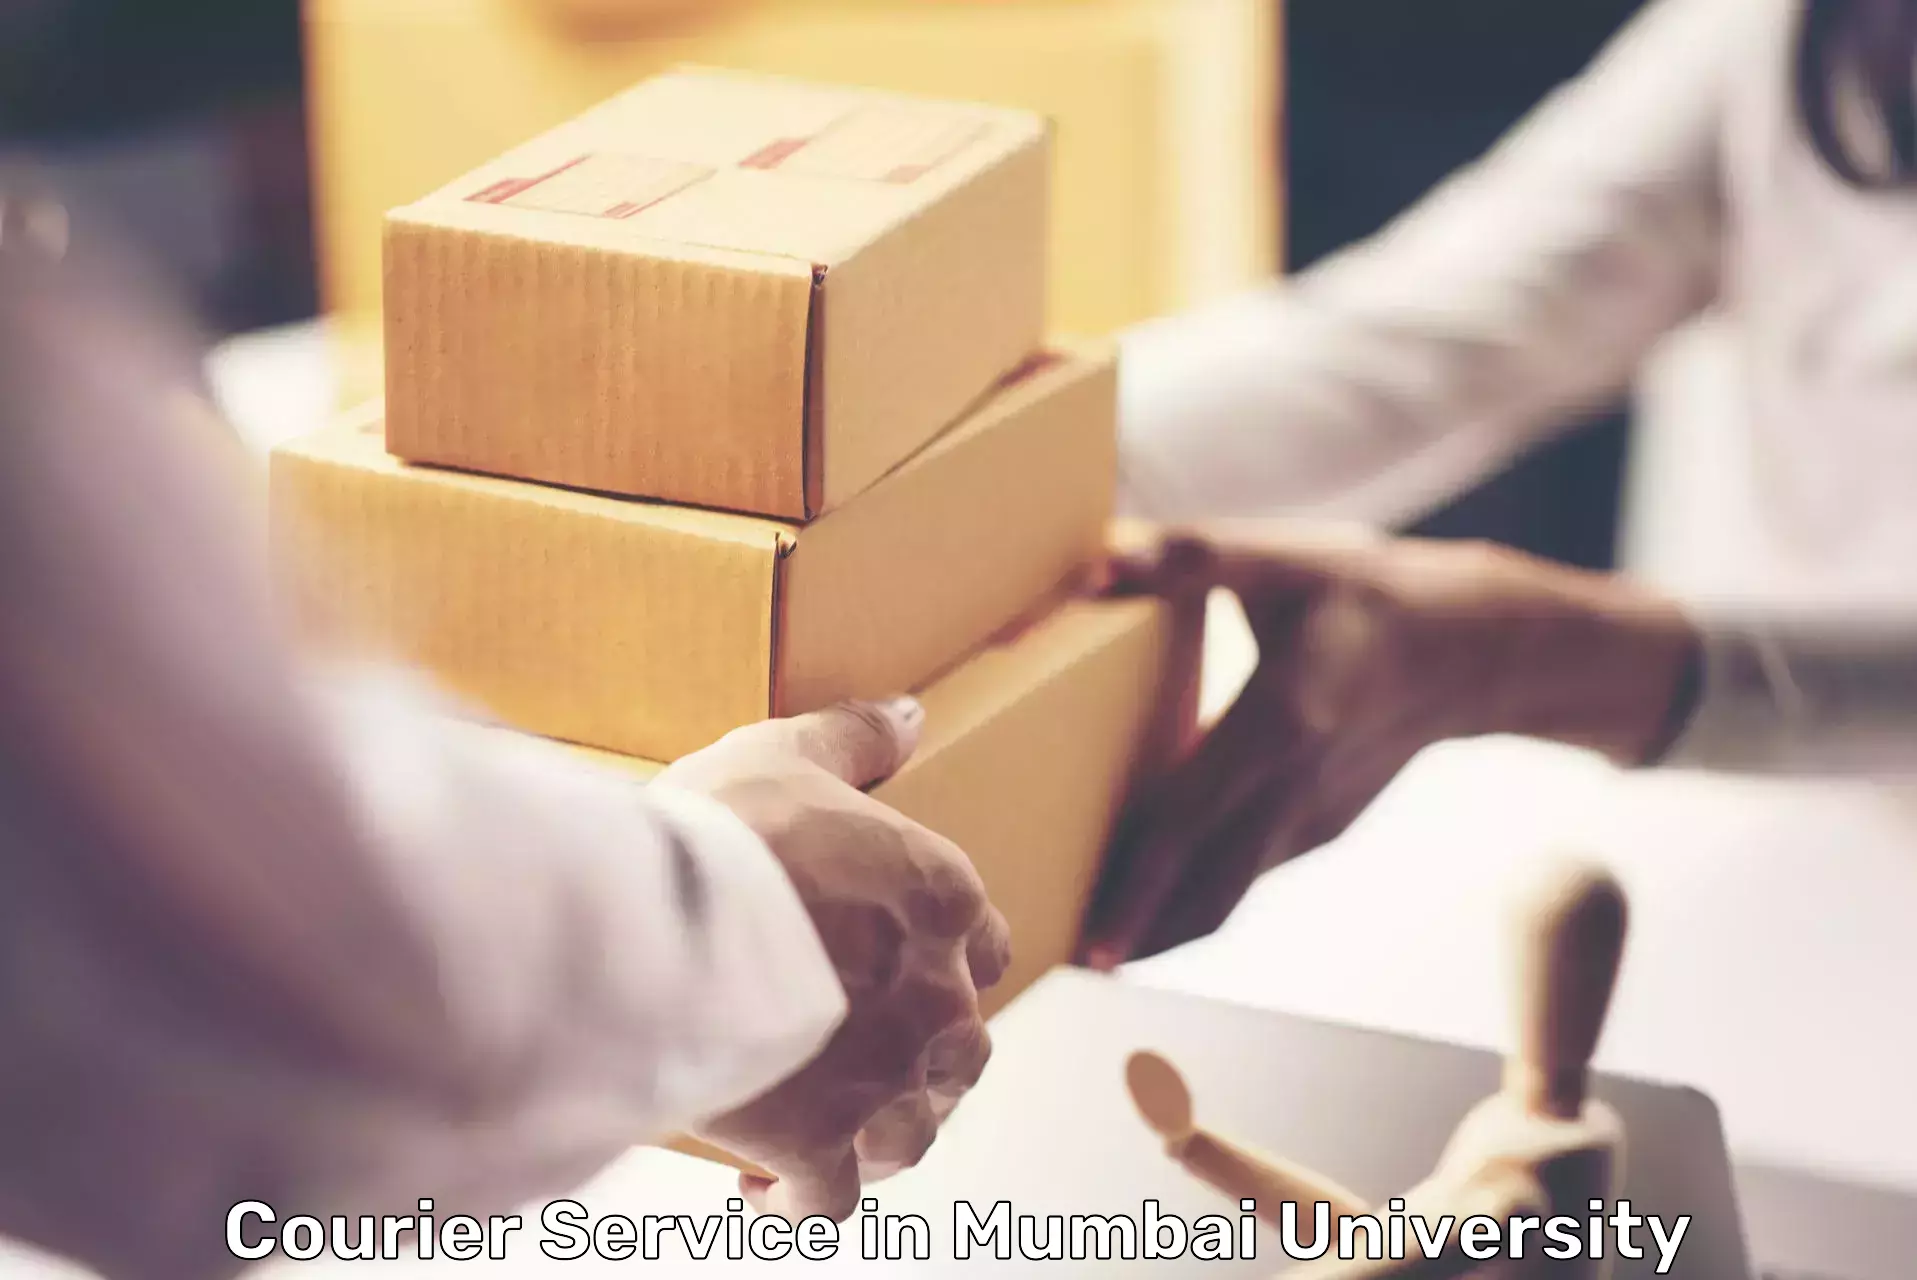 Integrated logistics solutions in Mumbai University